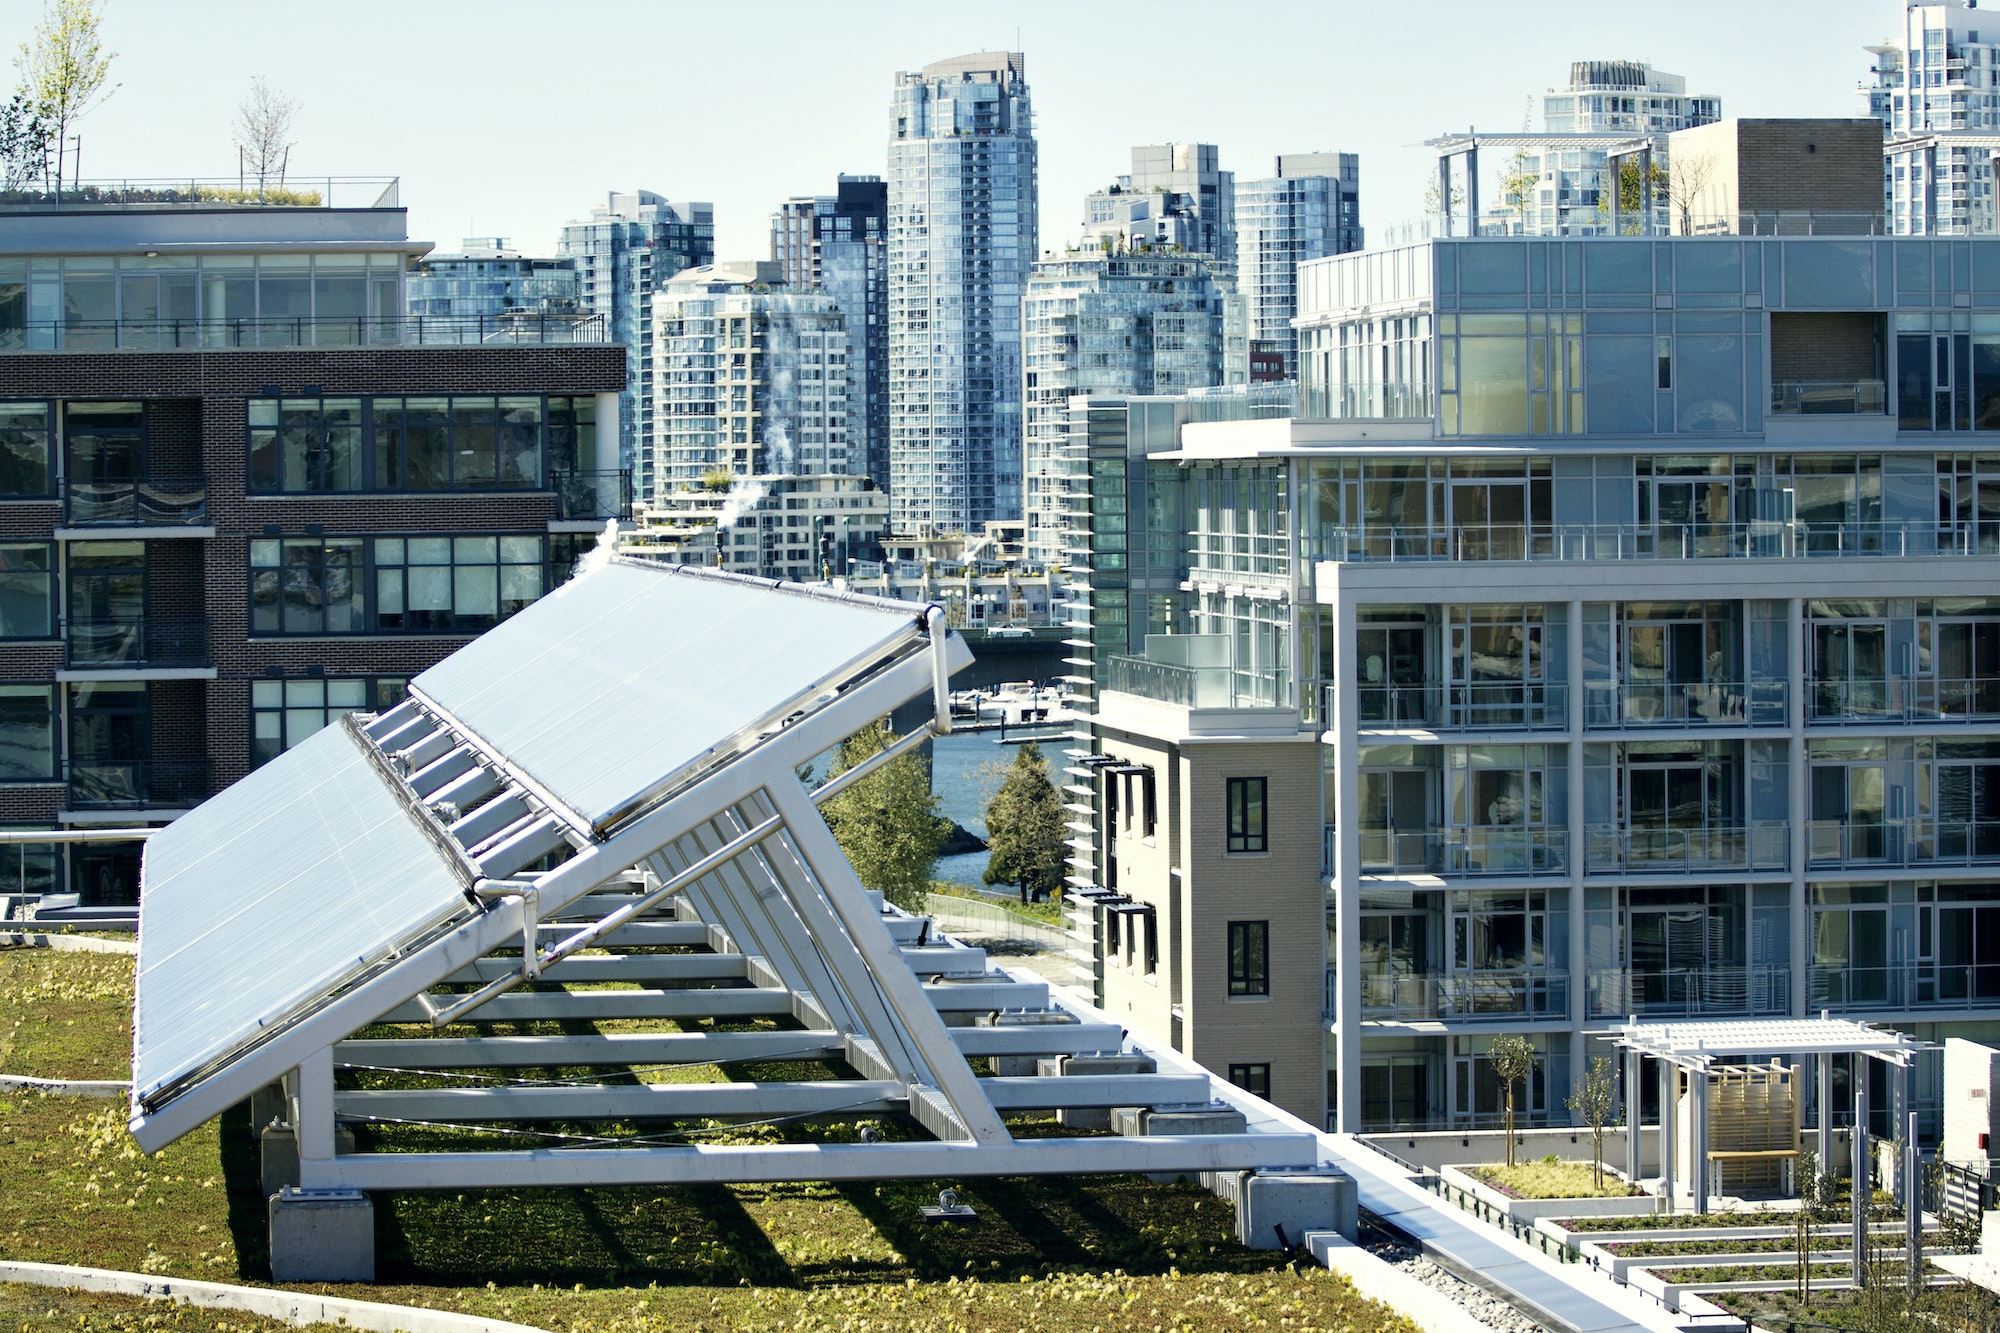 Solar Panel On Field By Buildings In City